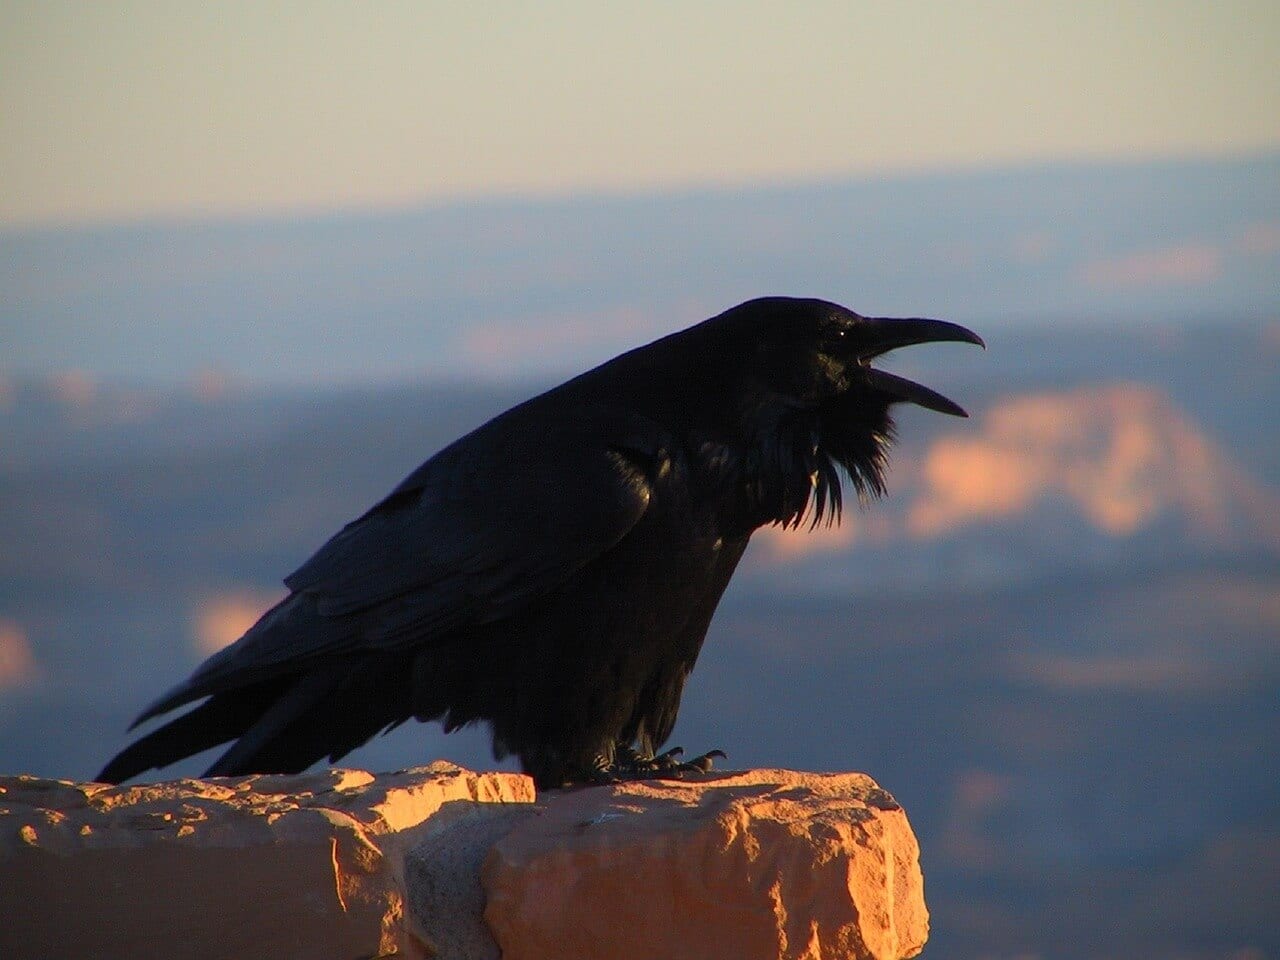 //pixabay.com/photos/raven-blackbird-corvus-crow-black-2060767/